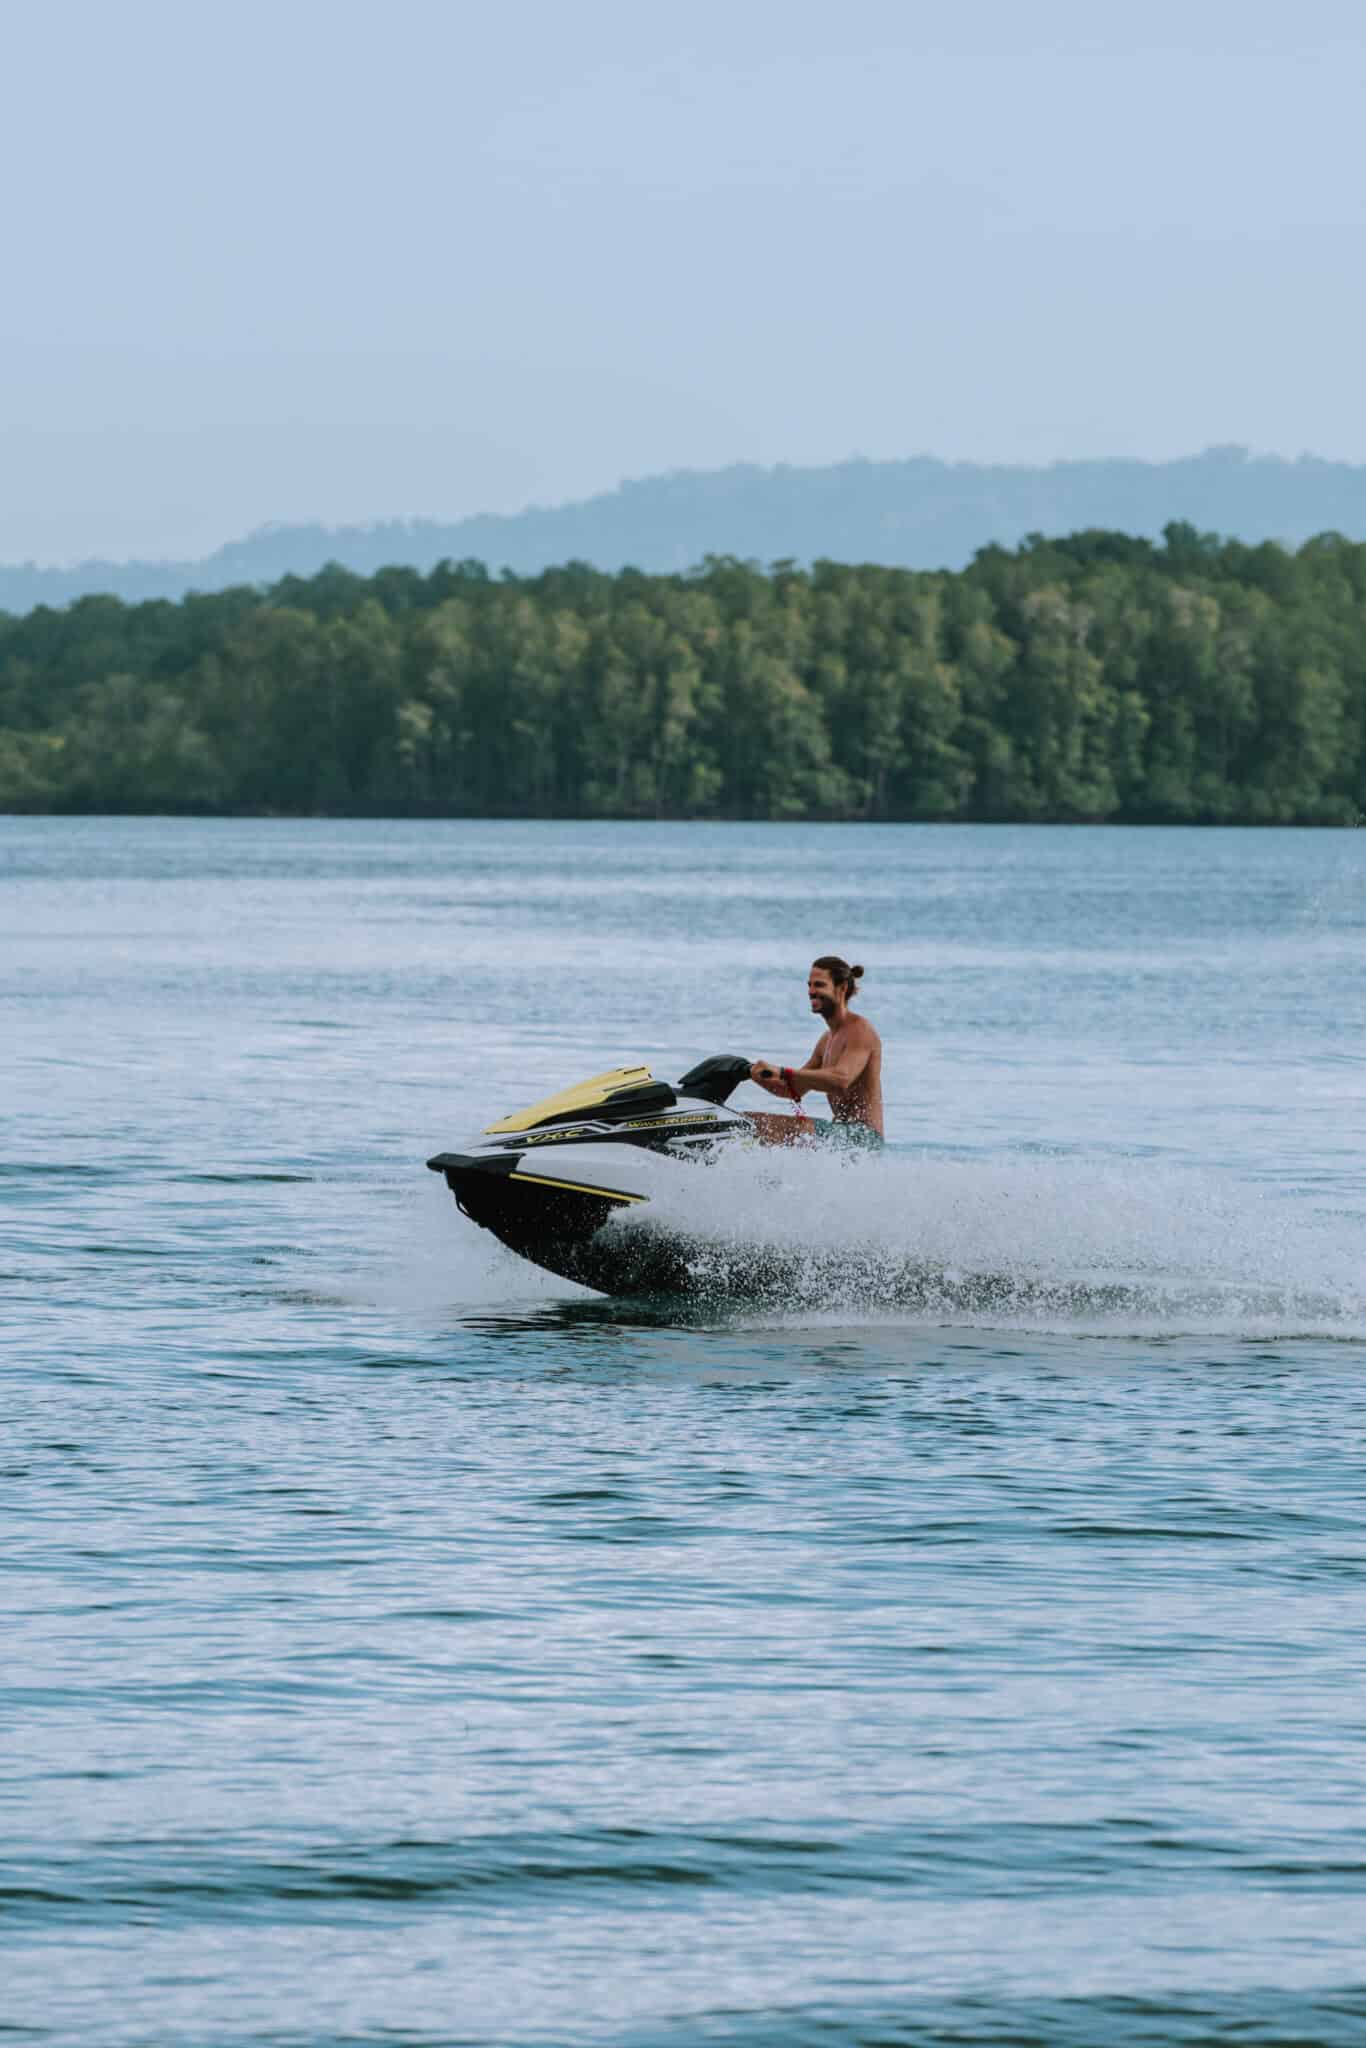 A man riding a jet ski on a lake, seeking employment opportunities.